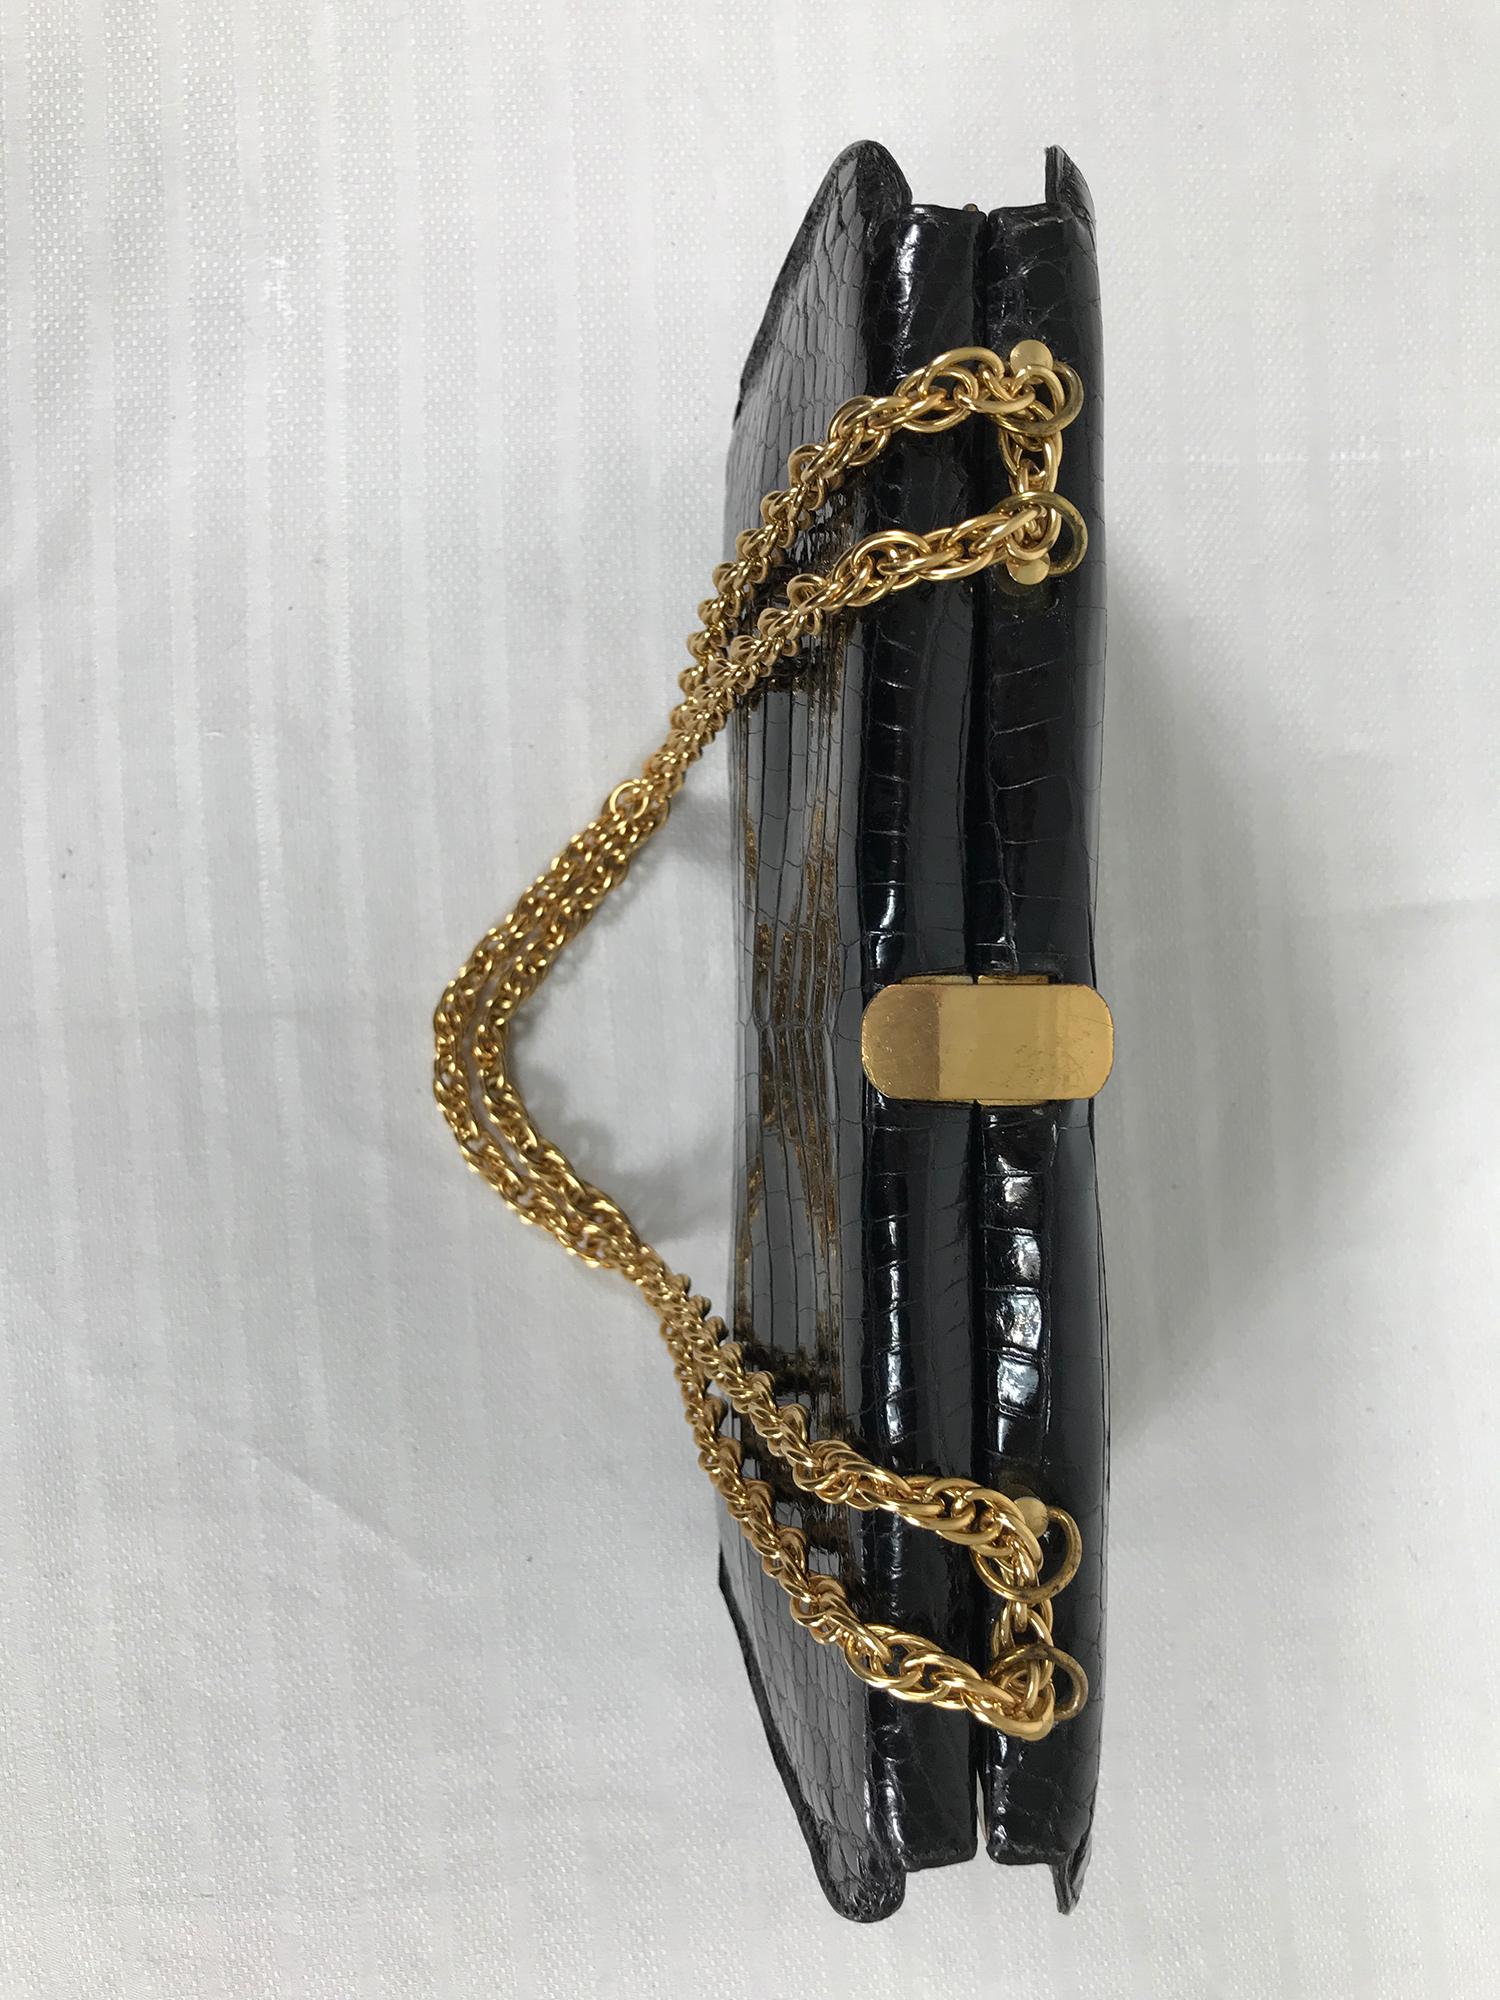 black handbag with gold hardware